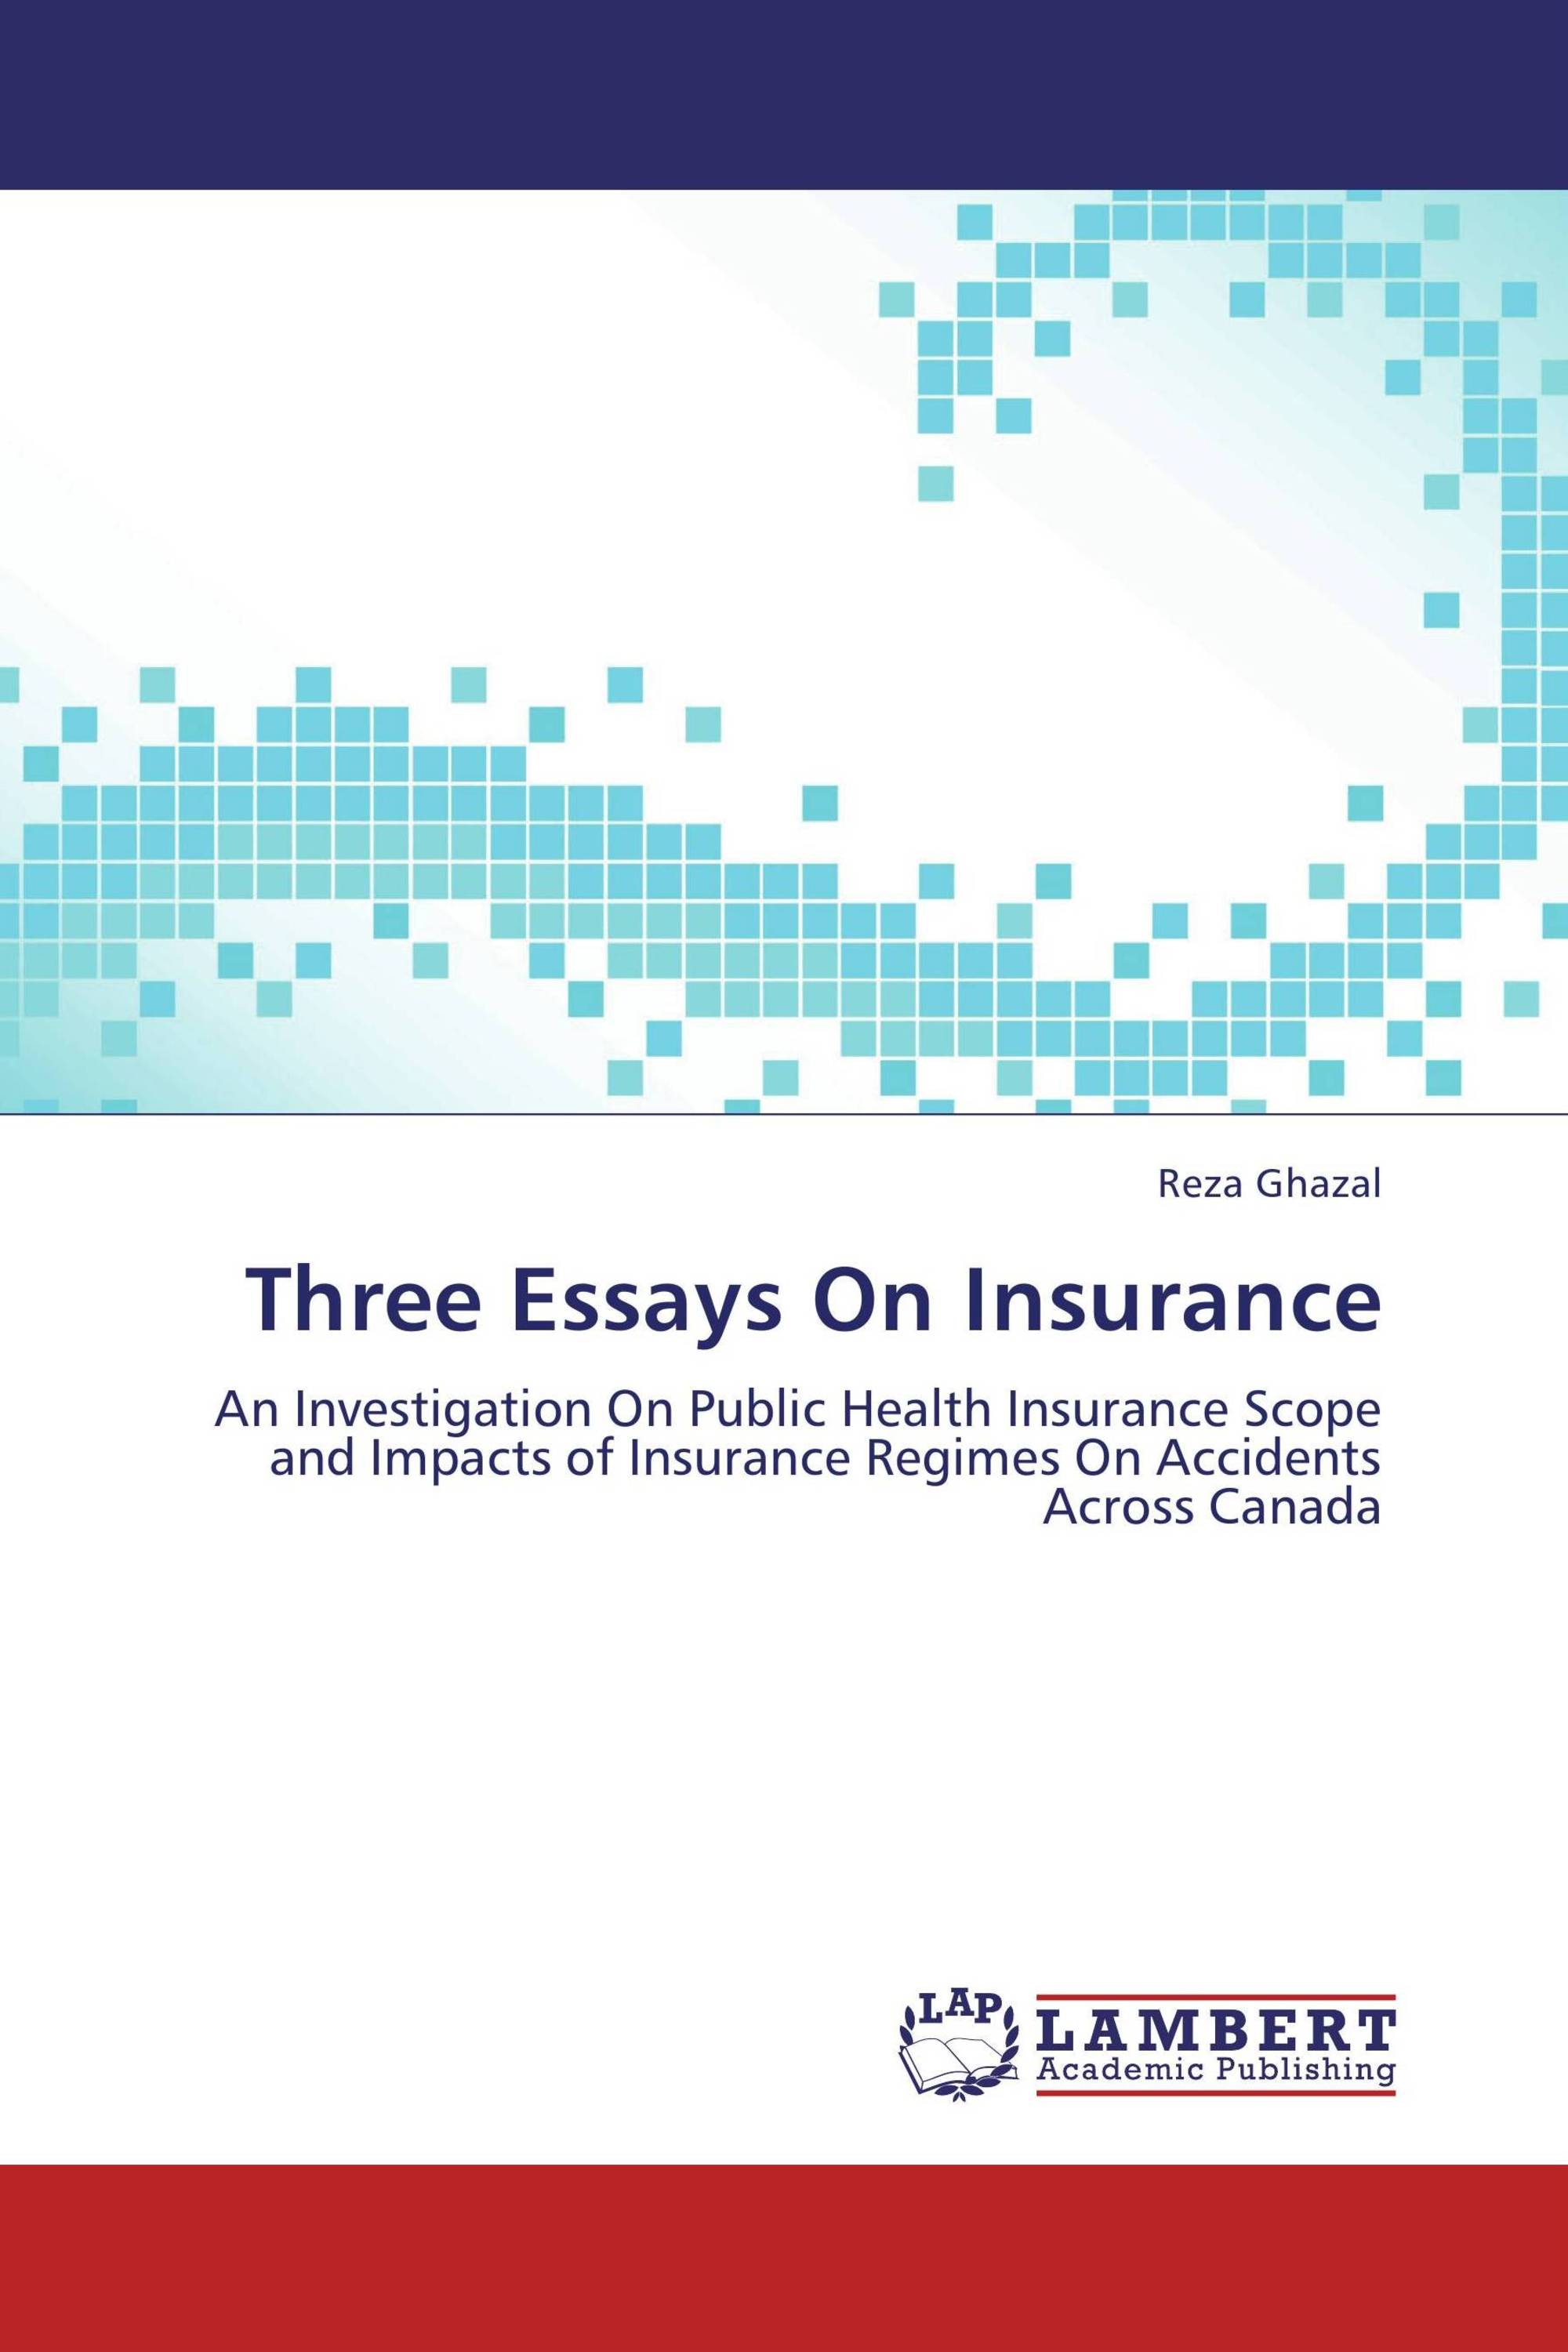 short case study on insurance